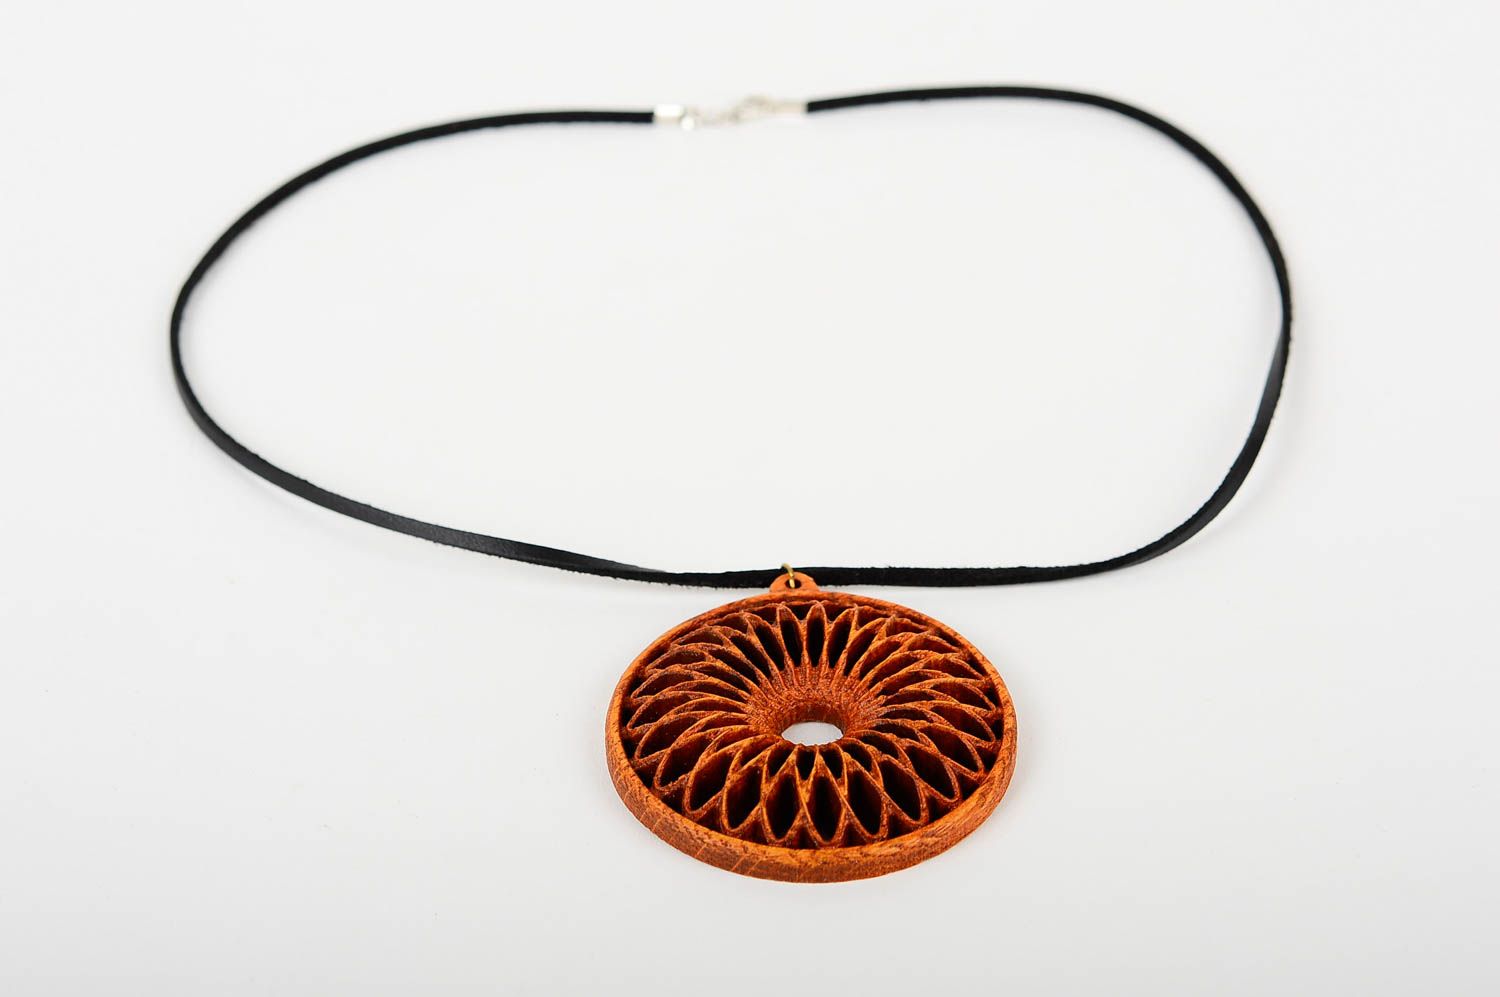 Handmade pendant unusual accessory wooden jewelry gift ideas pendant for men photo 4